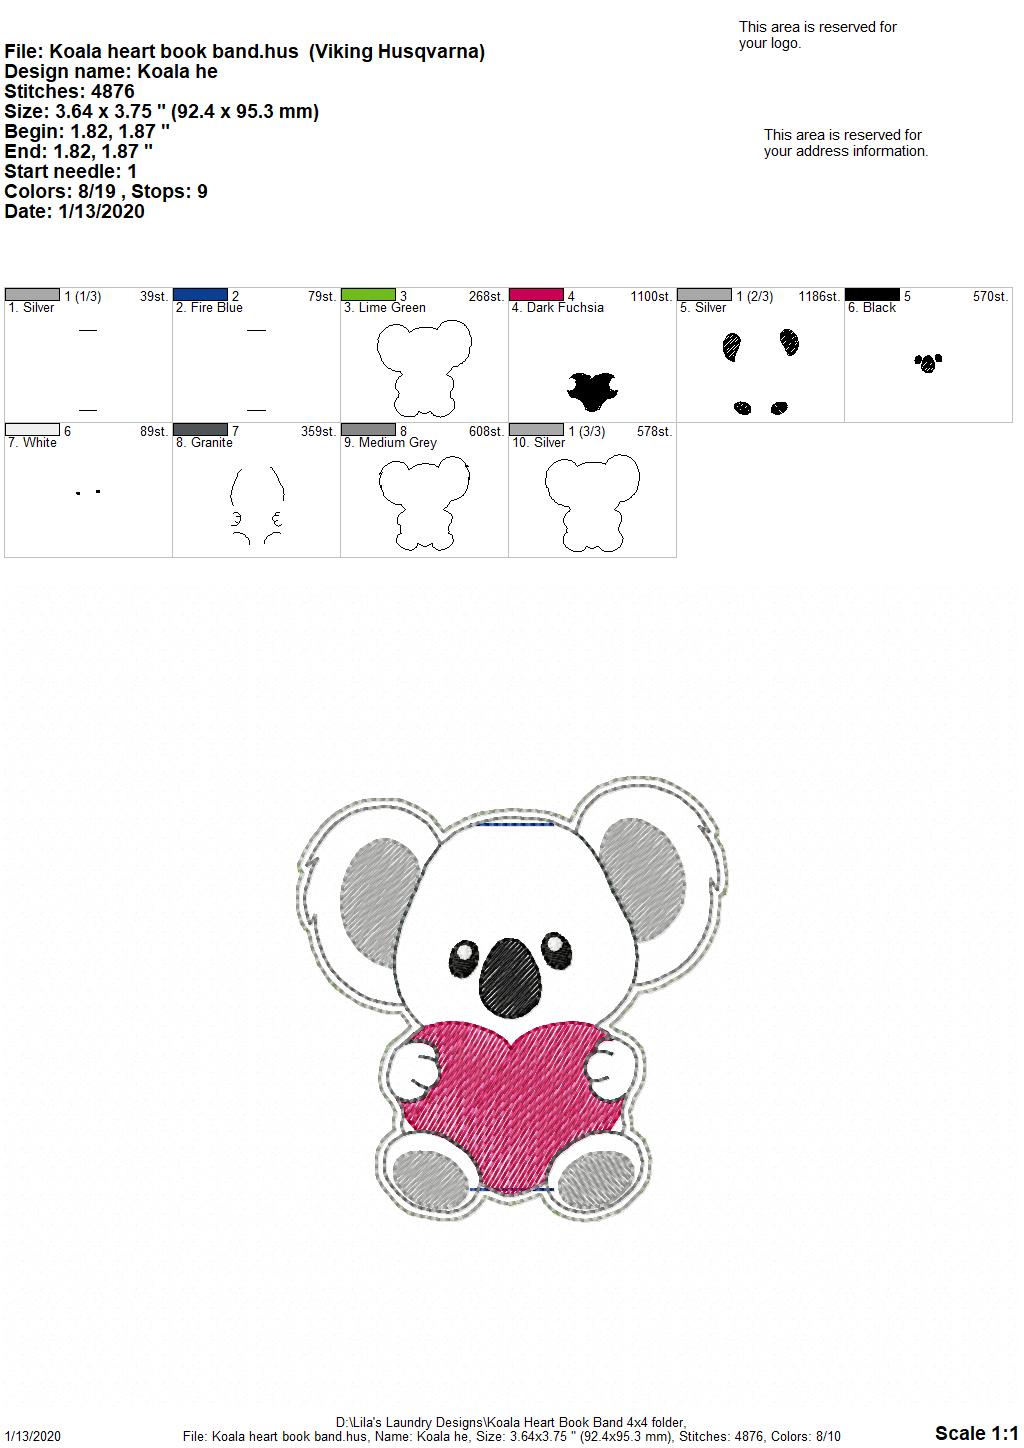 Koala Heart Book Band - Digital Embroidery Design